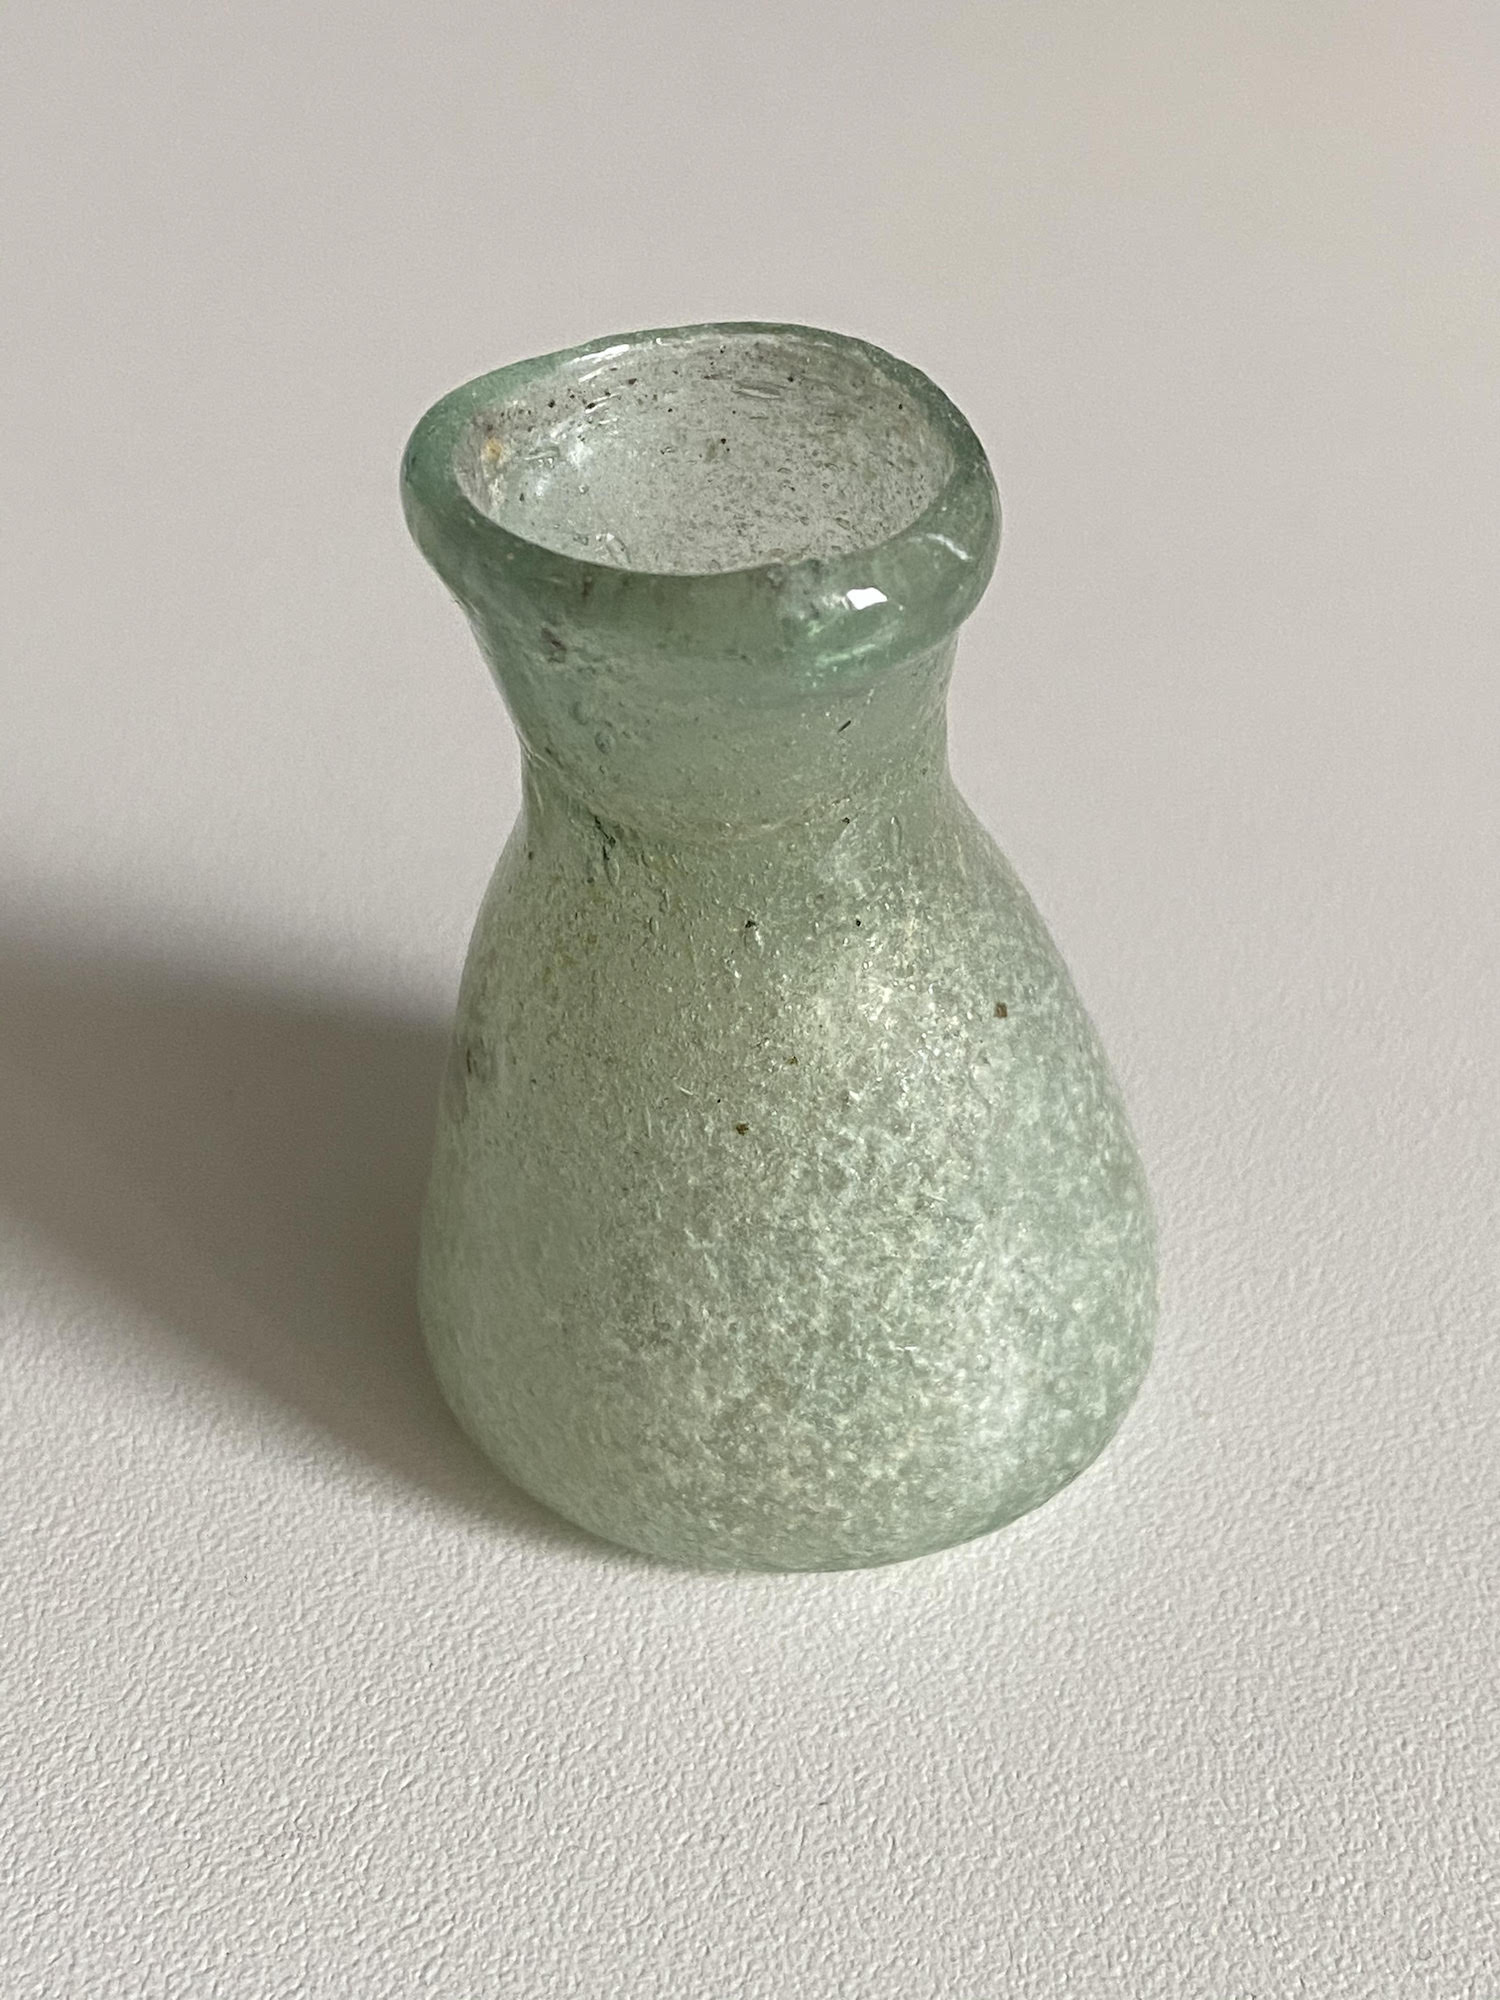 Zoe Laughlin's Roman Glass Vase